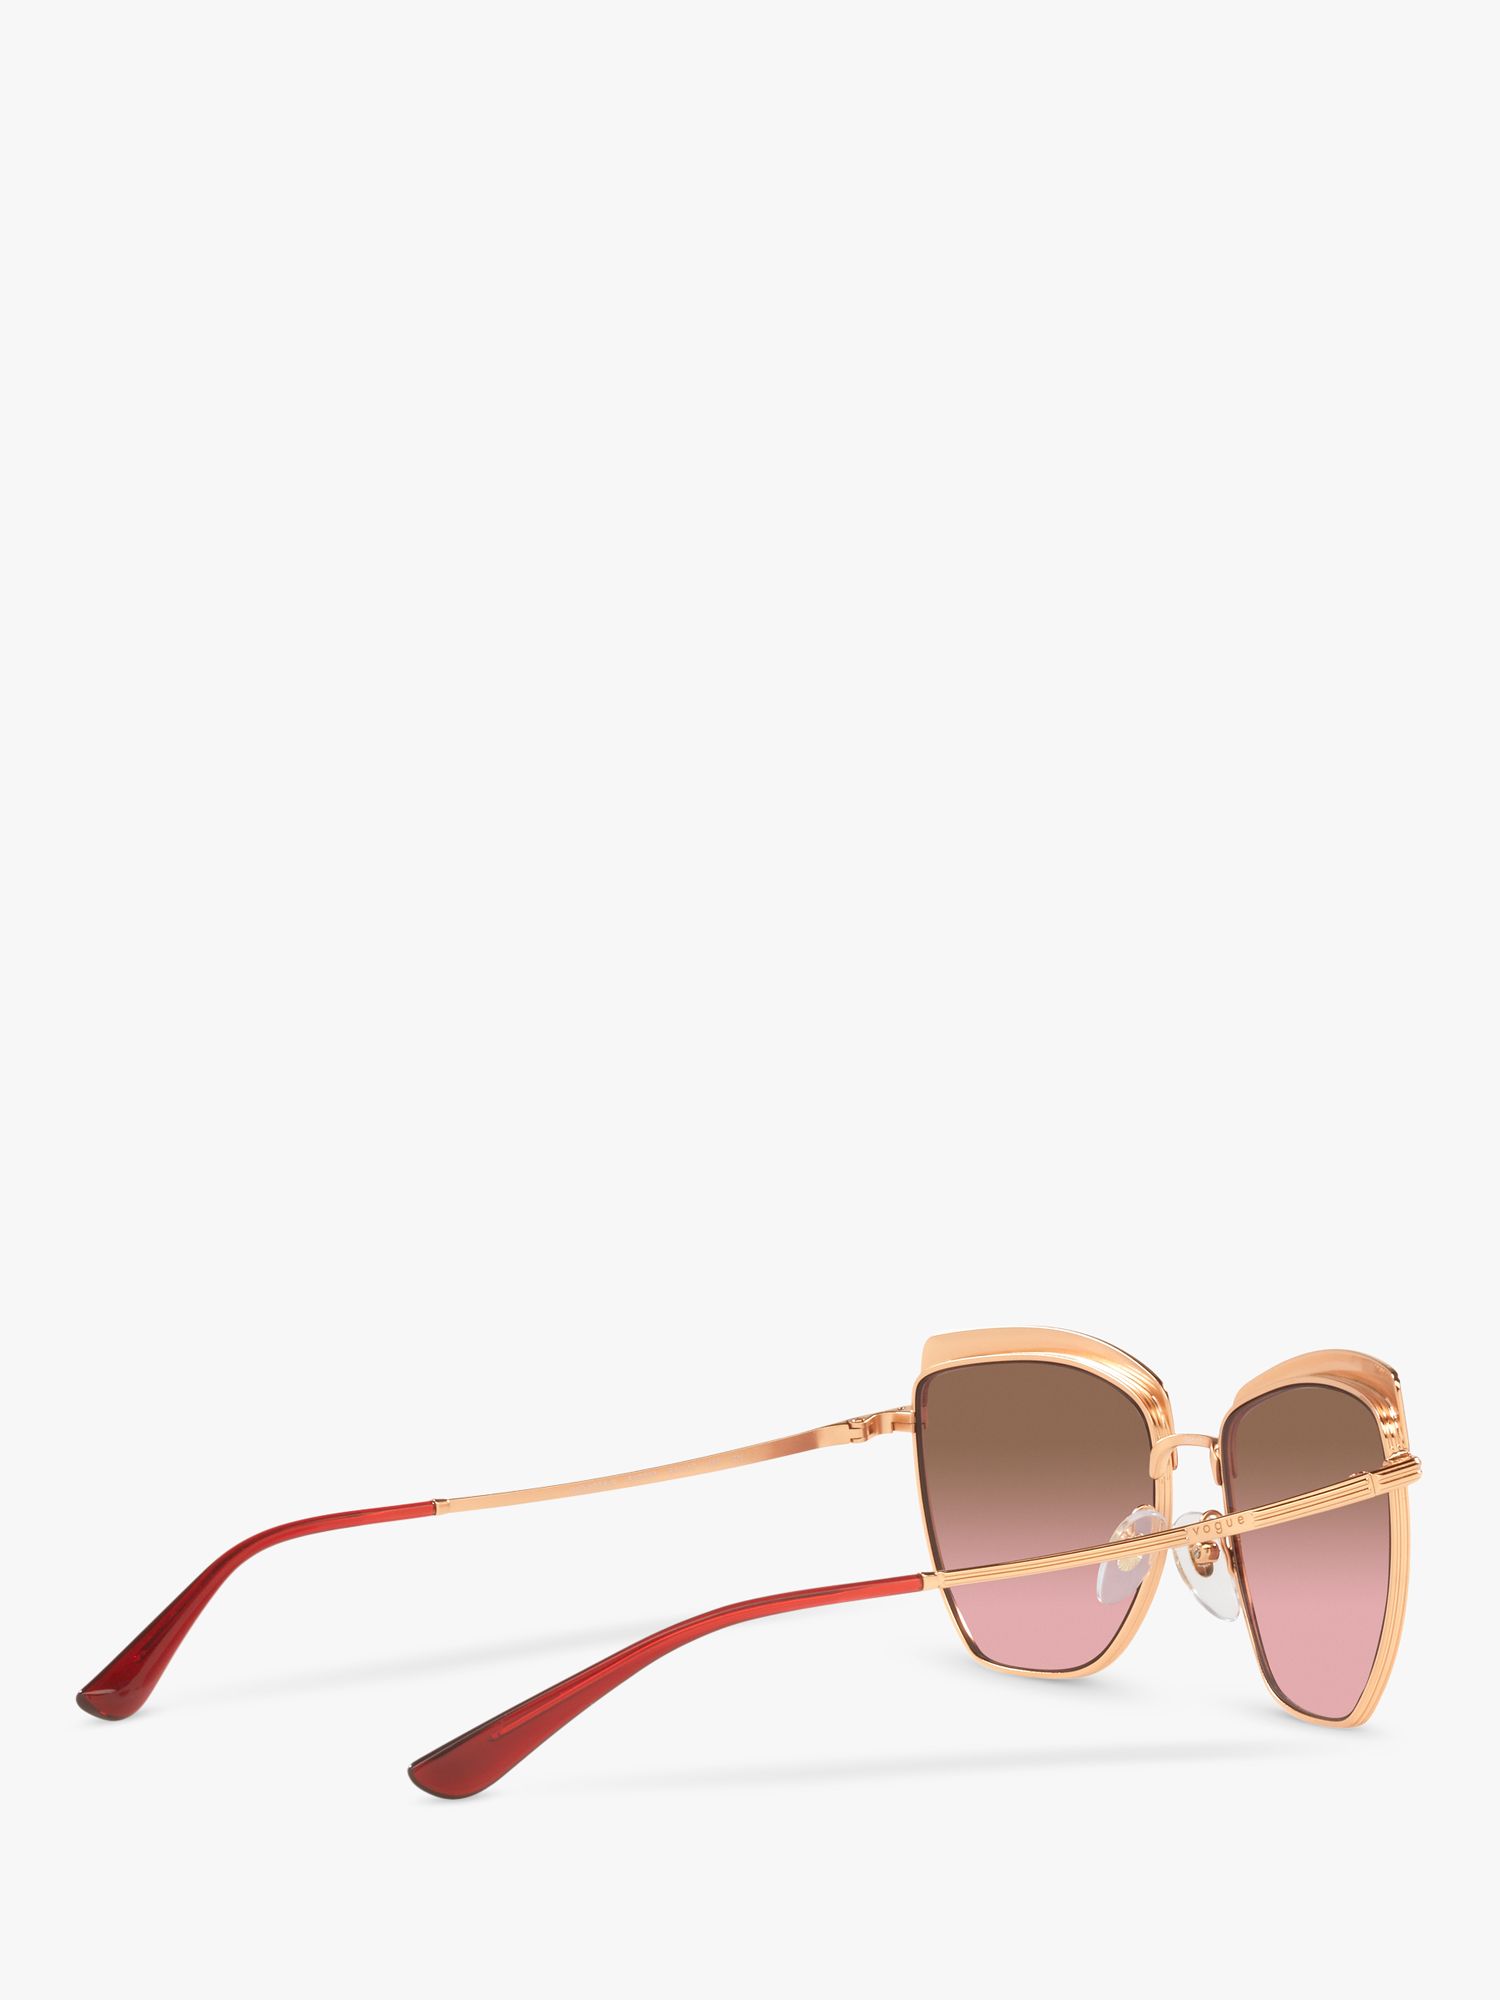 Buy Vogue VO4234S Women's Irregular Sunglasses, Rose Gold/Pink Gradient Online at johnlewis.com